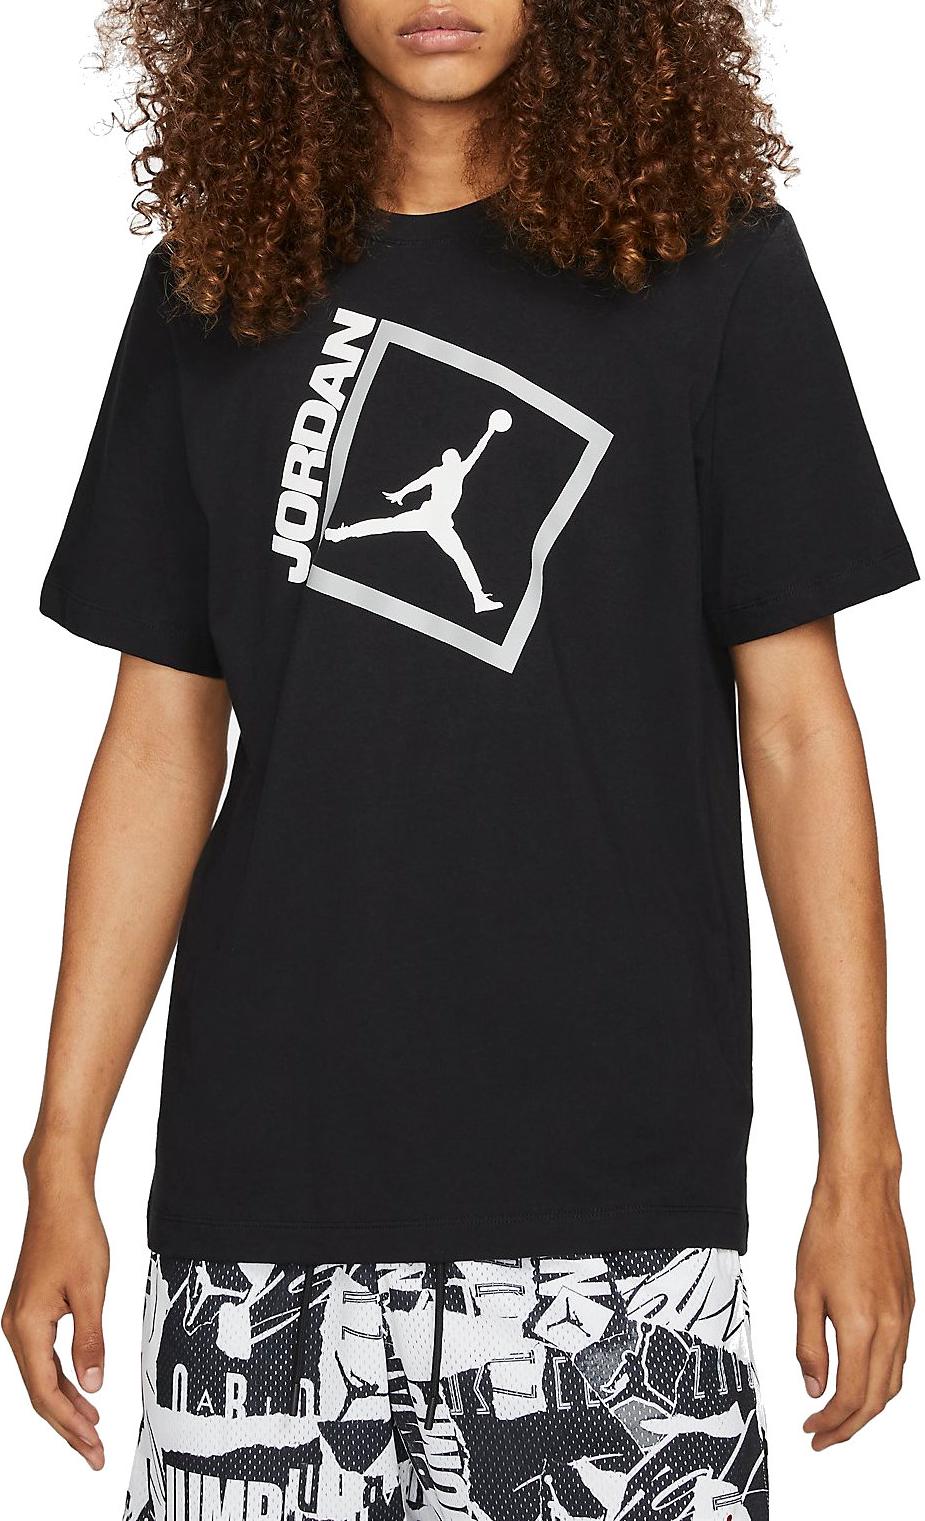 Tričko Jordan Jumpman Box Men s Short-Sleeve T-Shirt